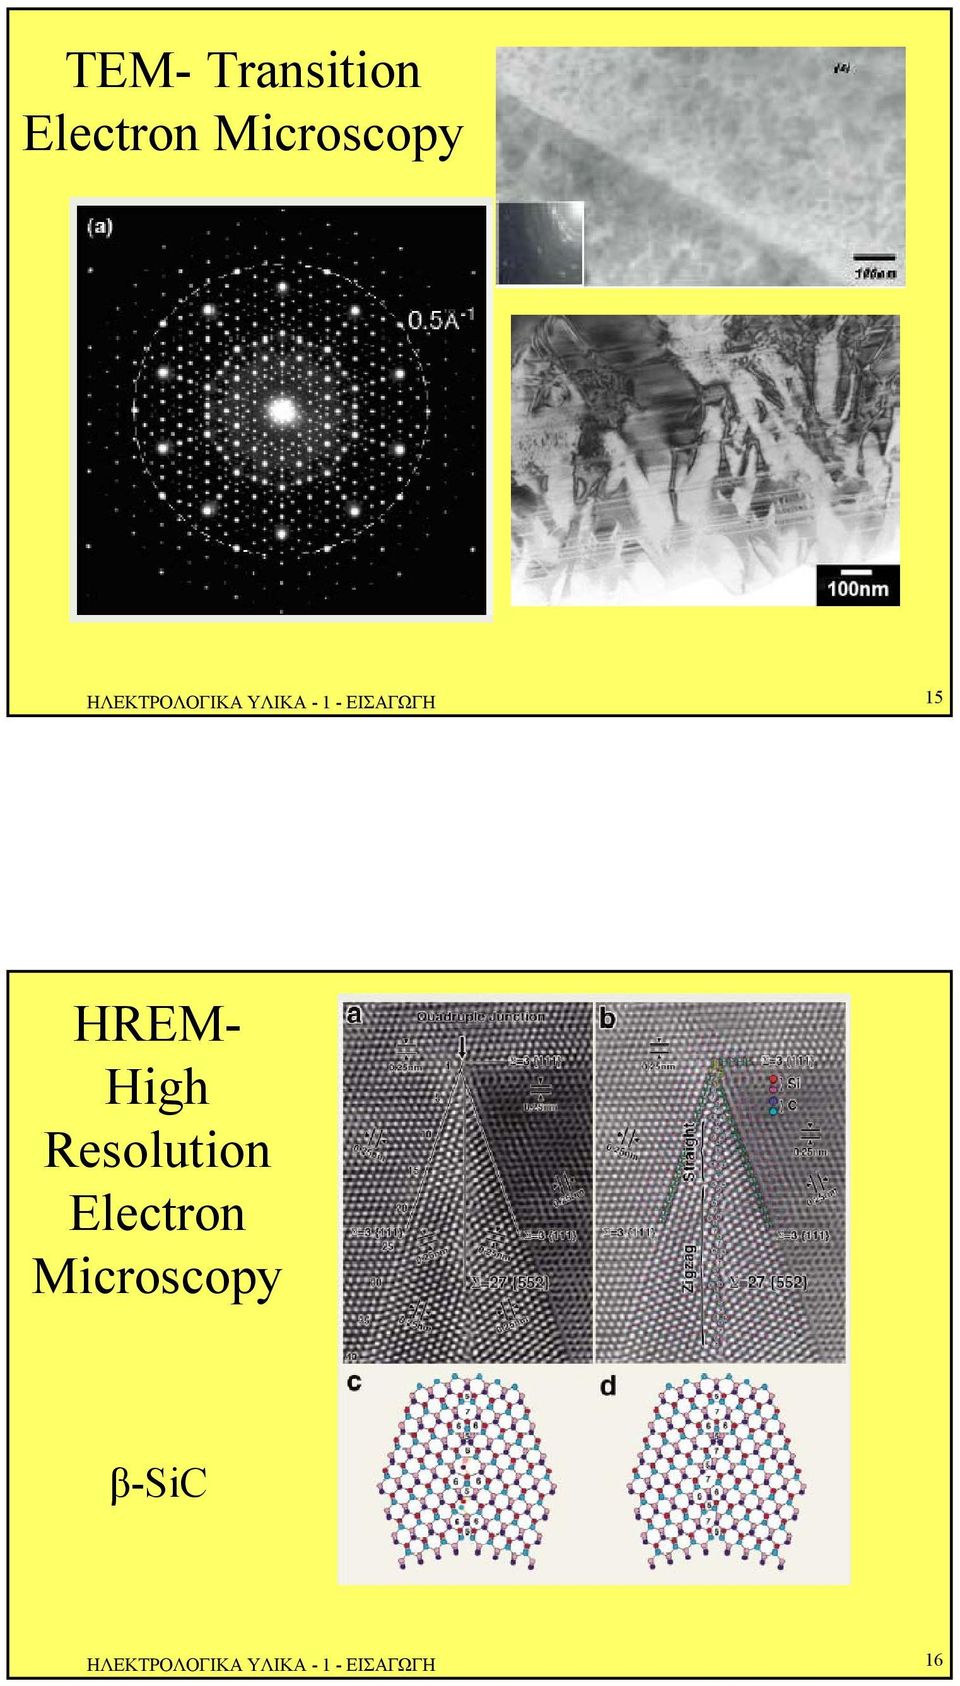 HREM- High Resolution Electron